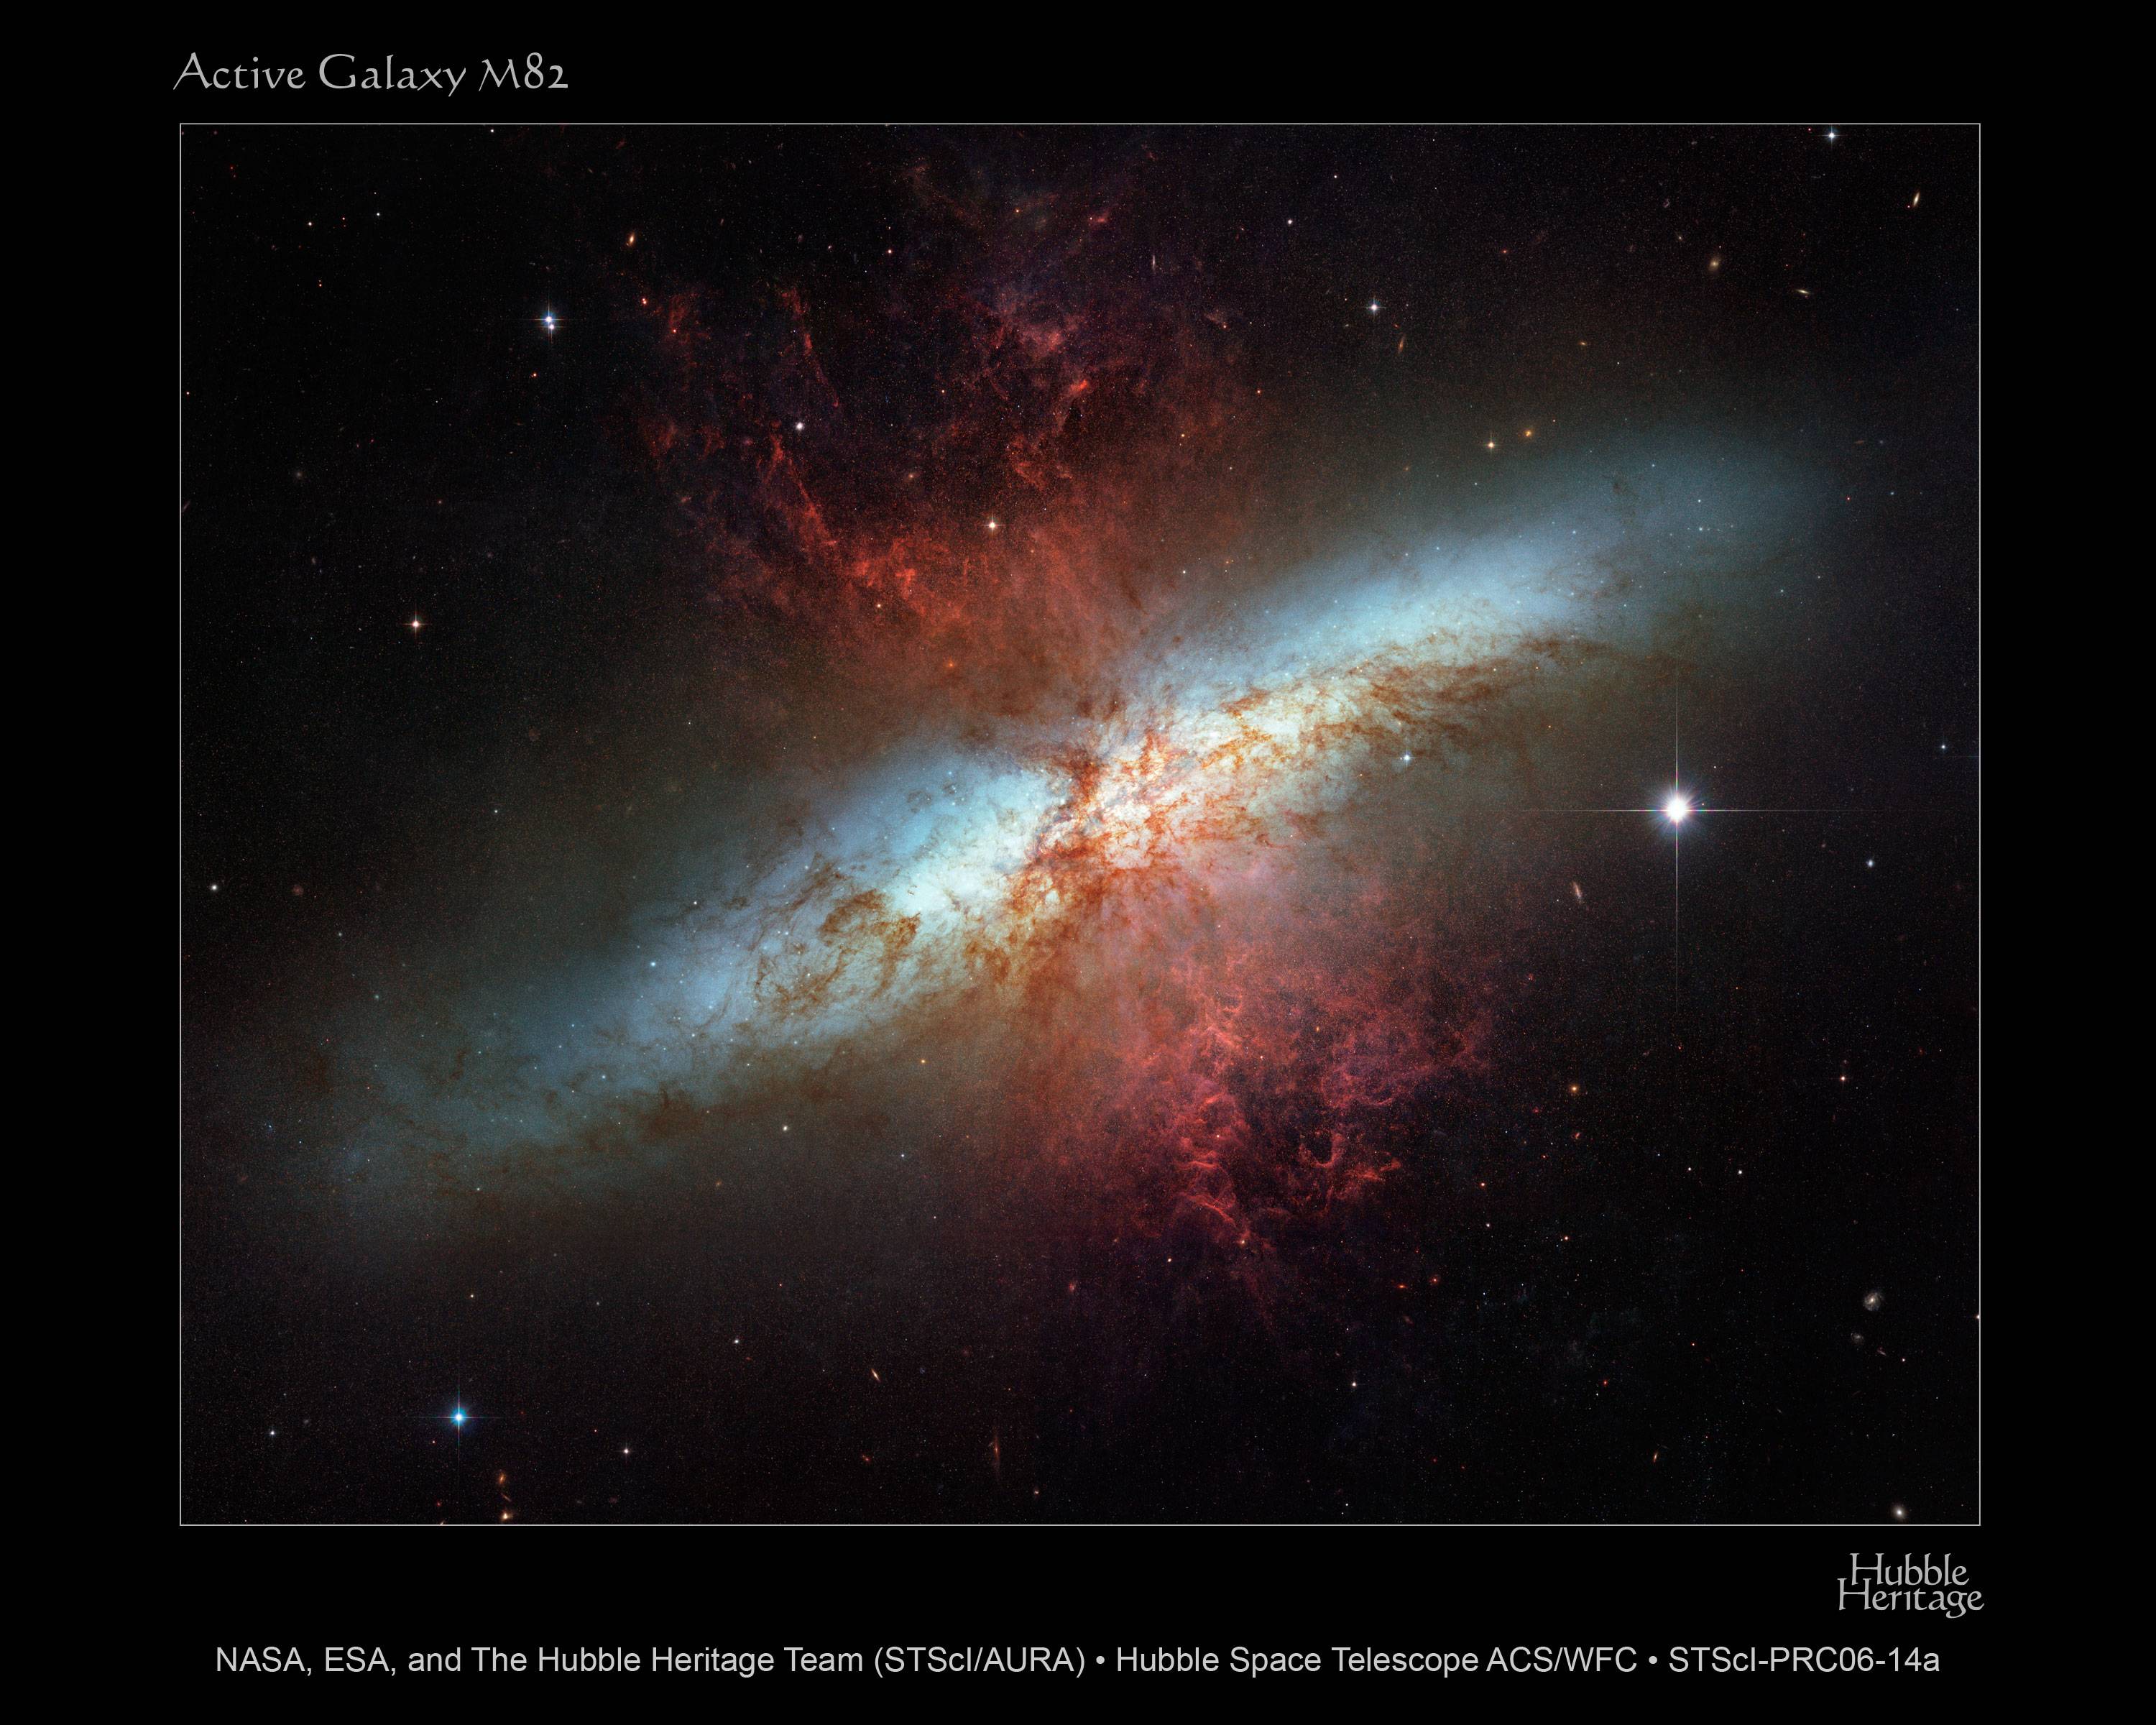 HubbleSite Album: Happy Sweet Sixteen, Hubble Telescope